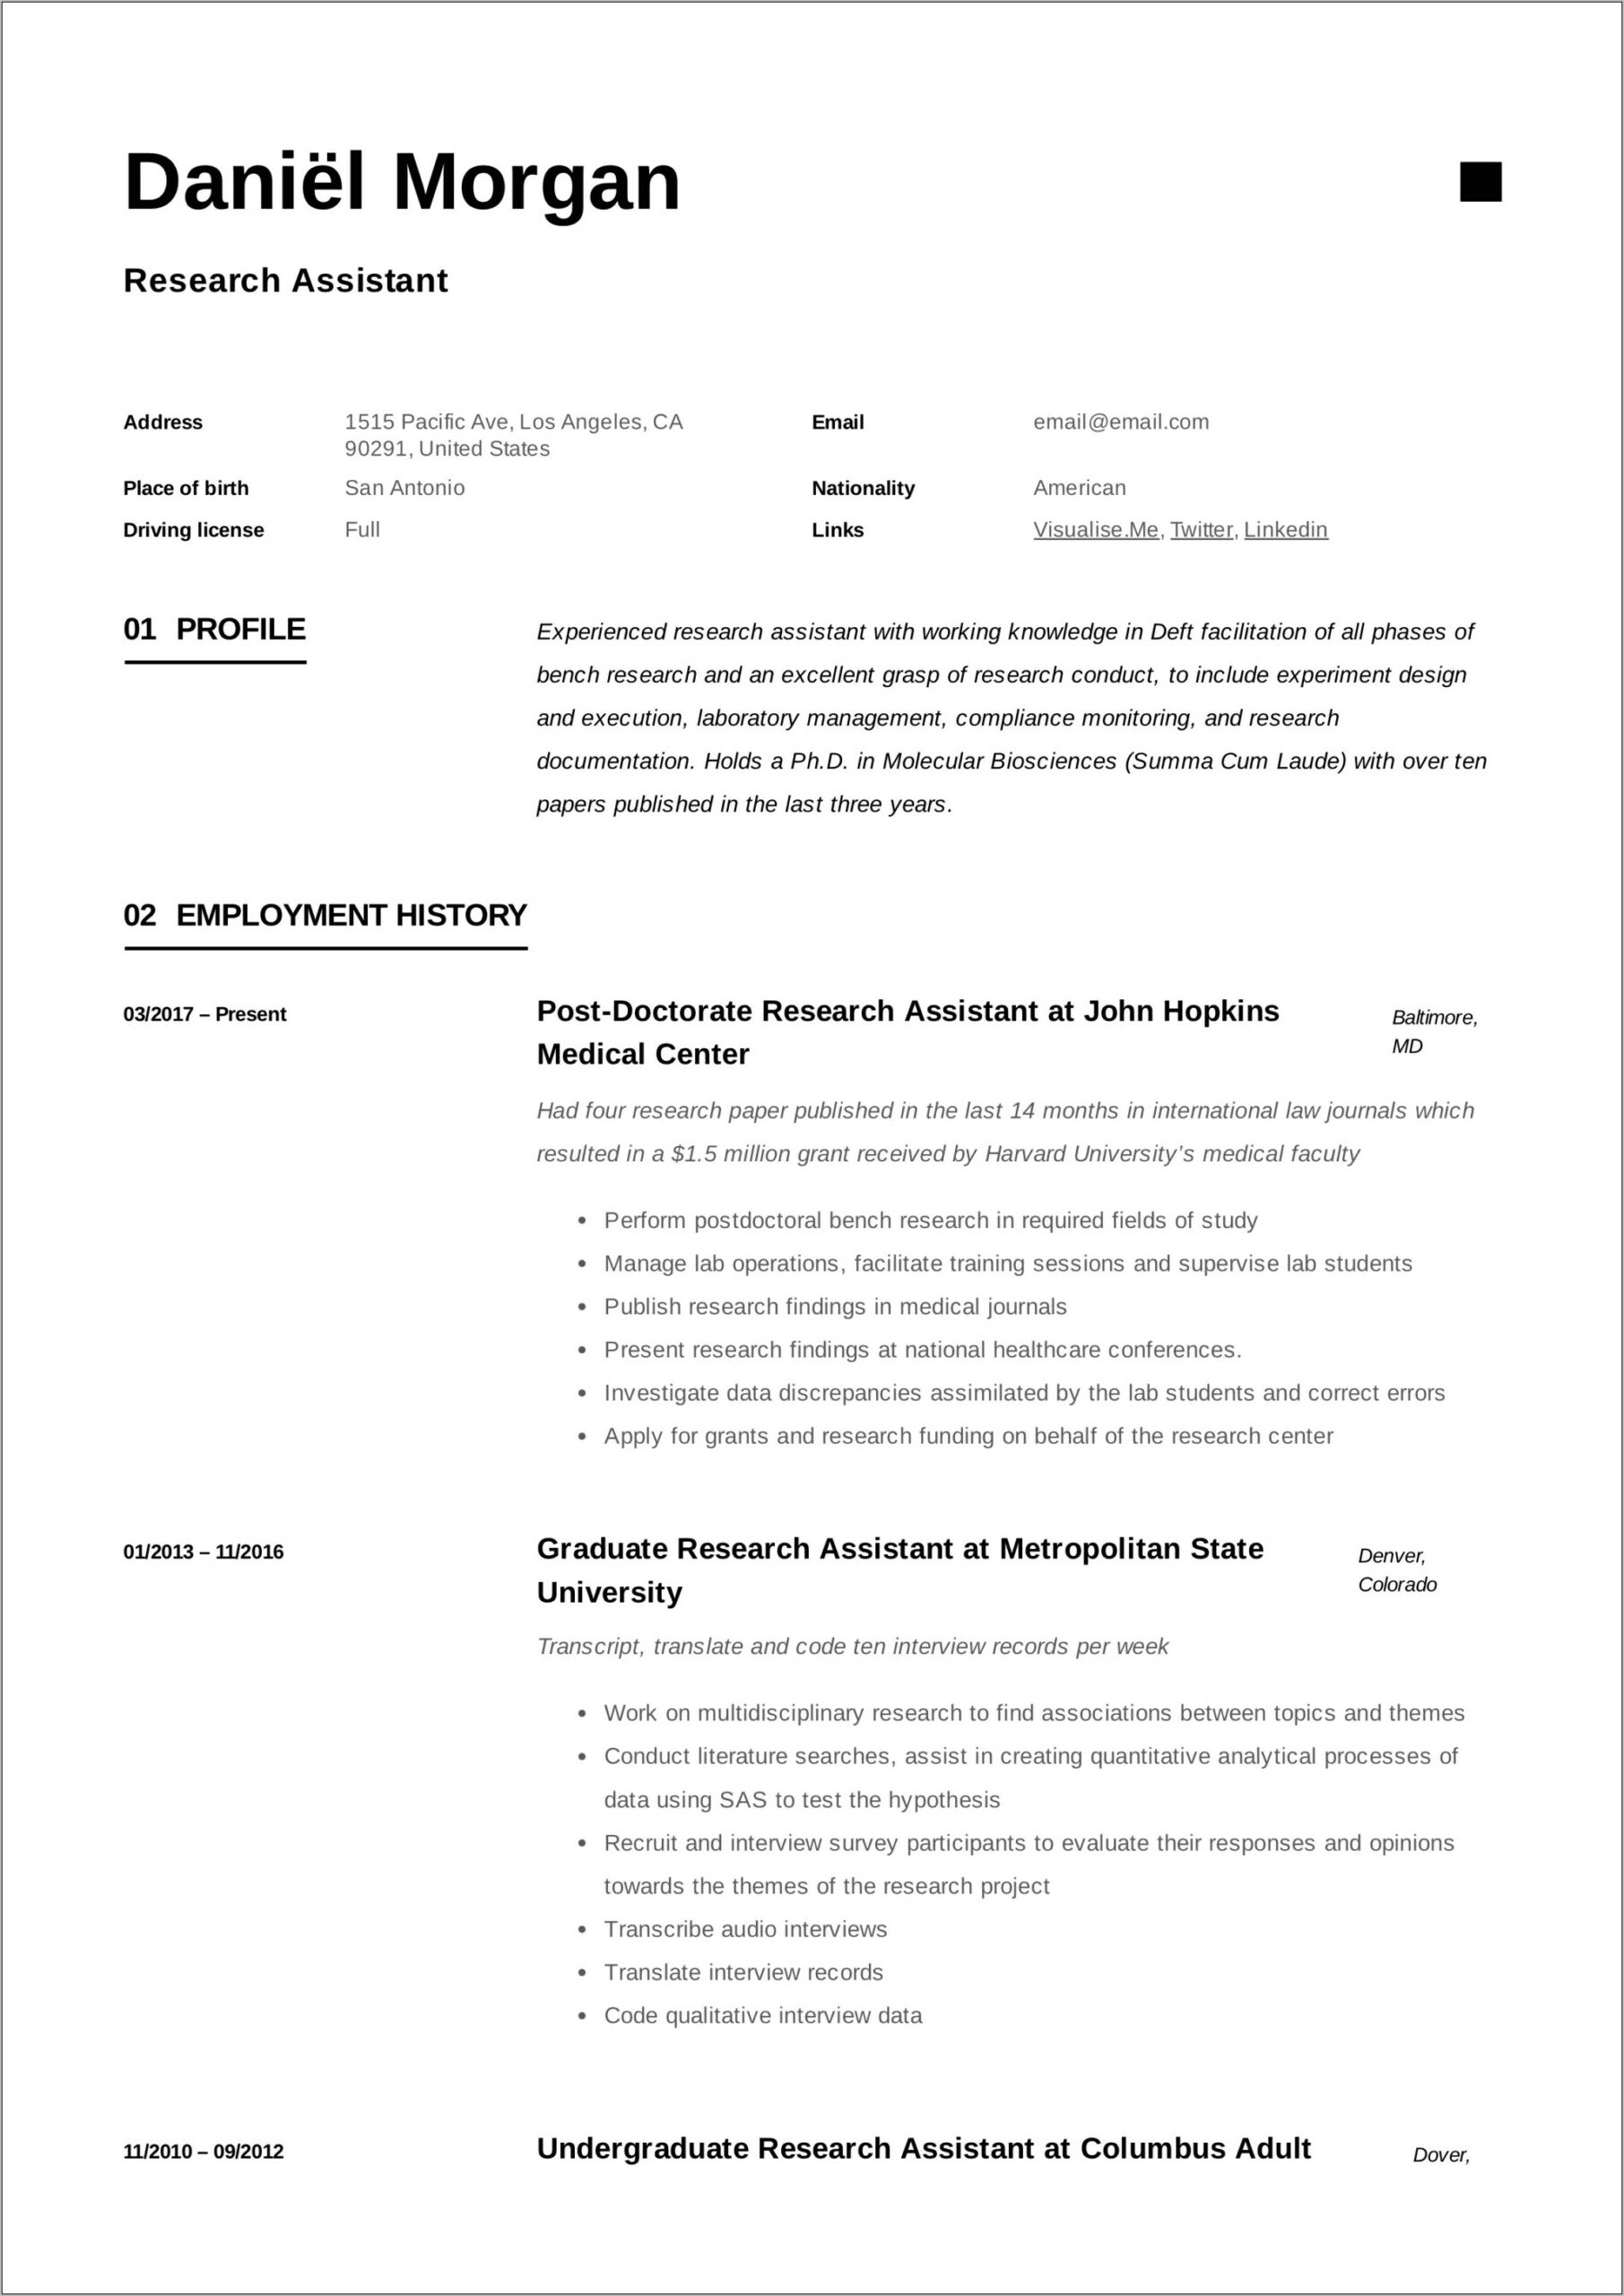 Resume Job Description For Library Assistant